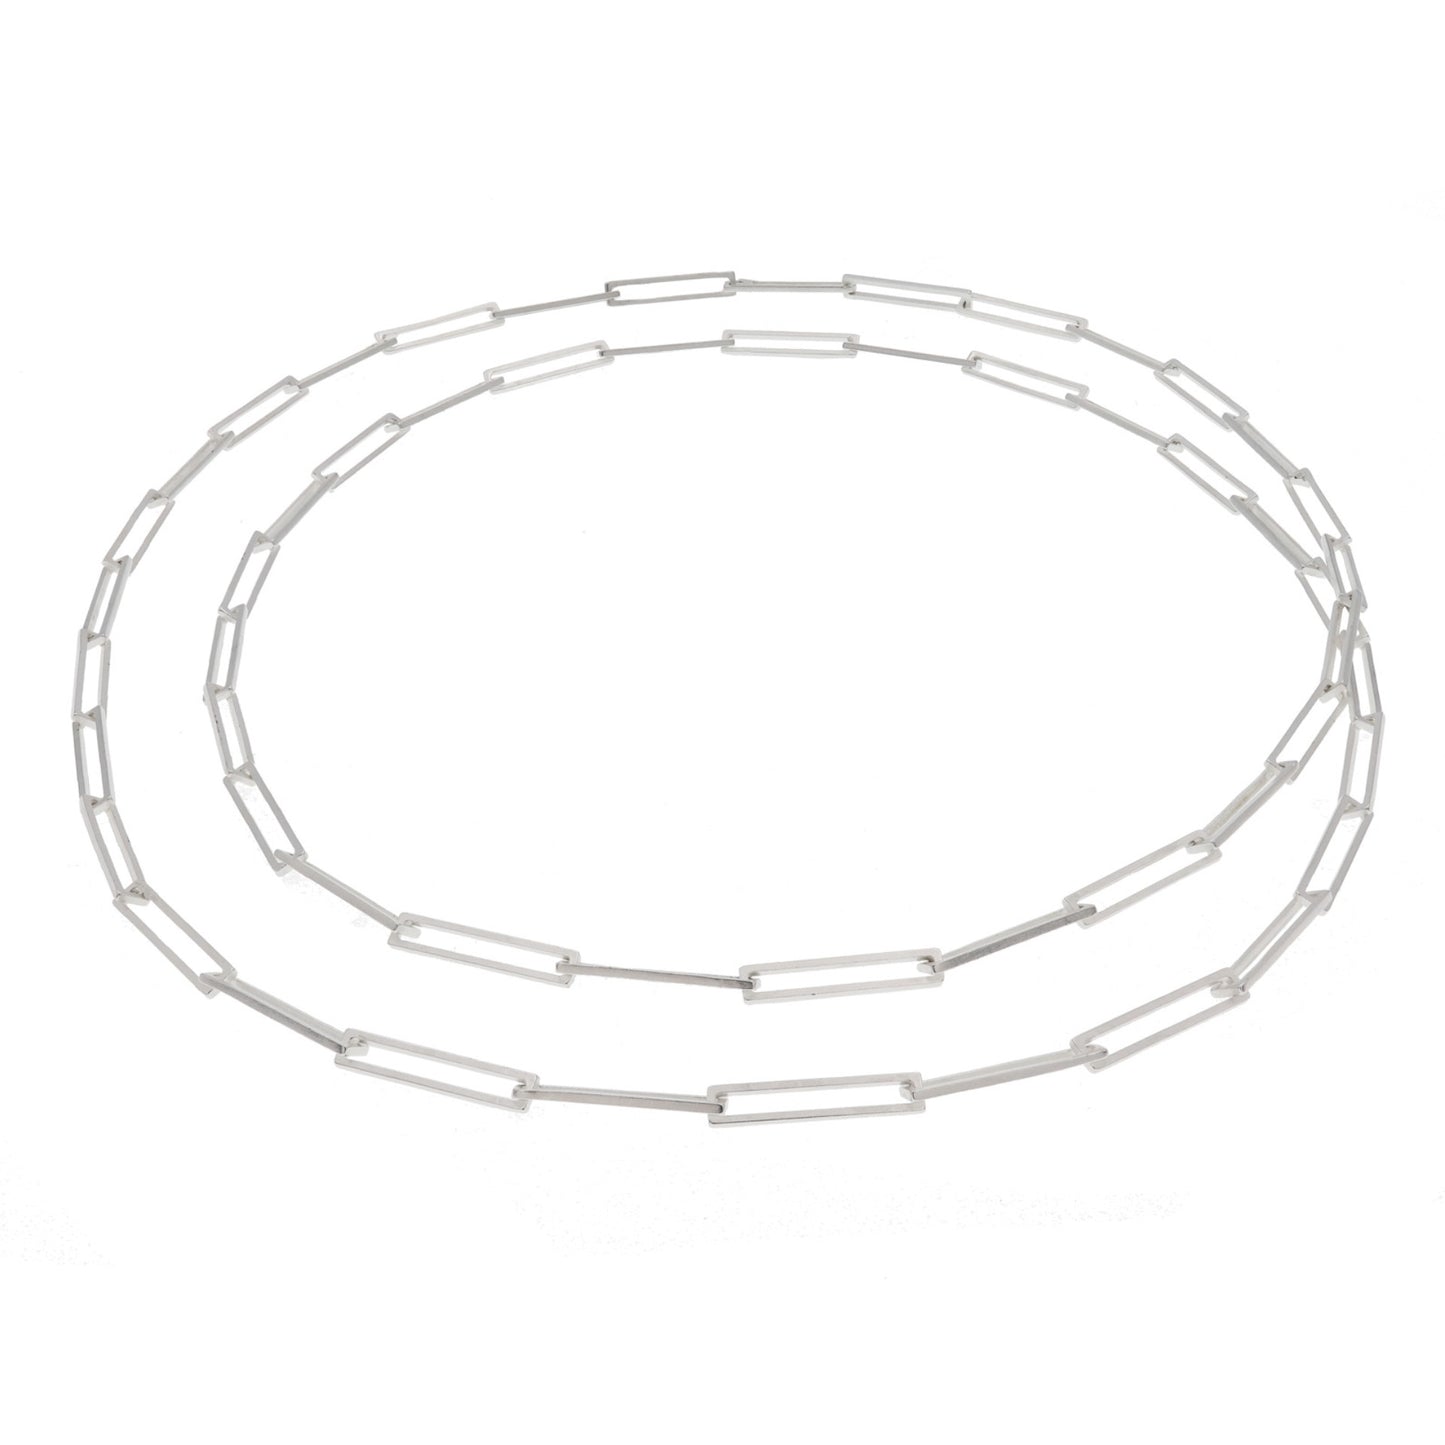 Silver 'Slim' Rectangular Link Necklace